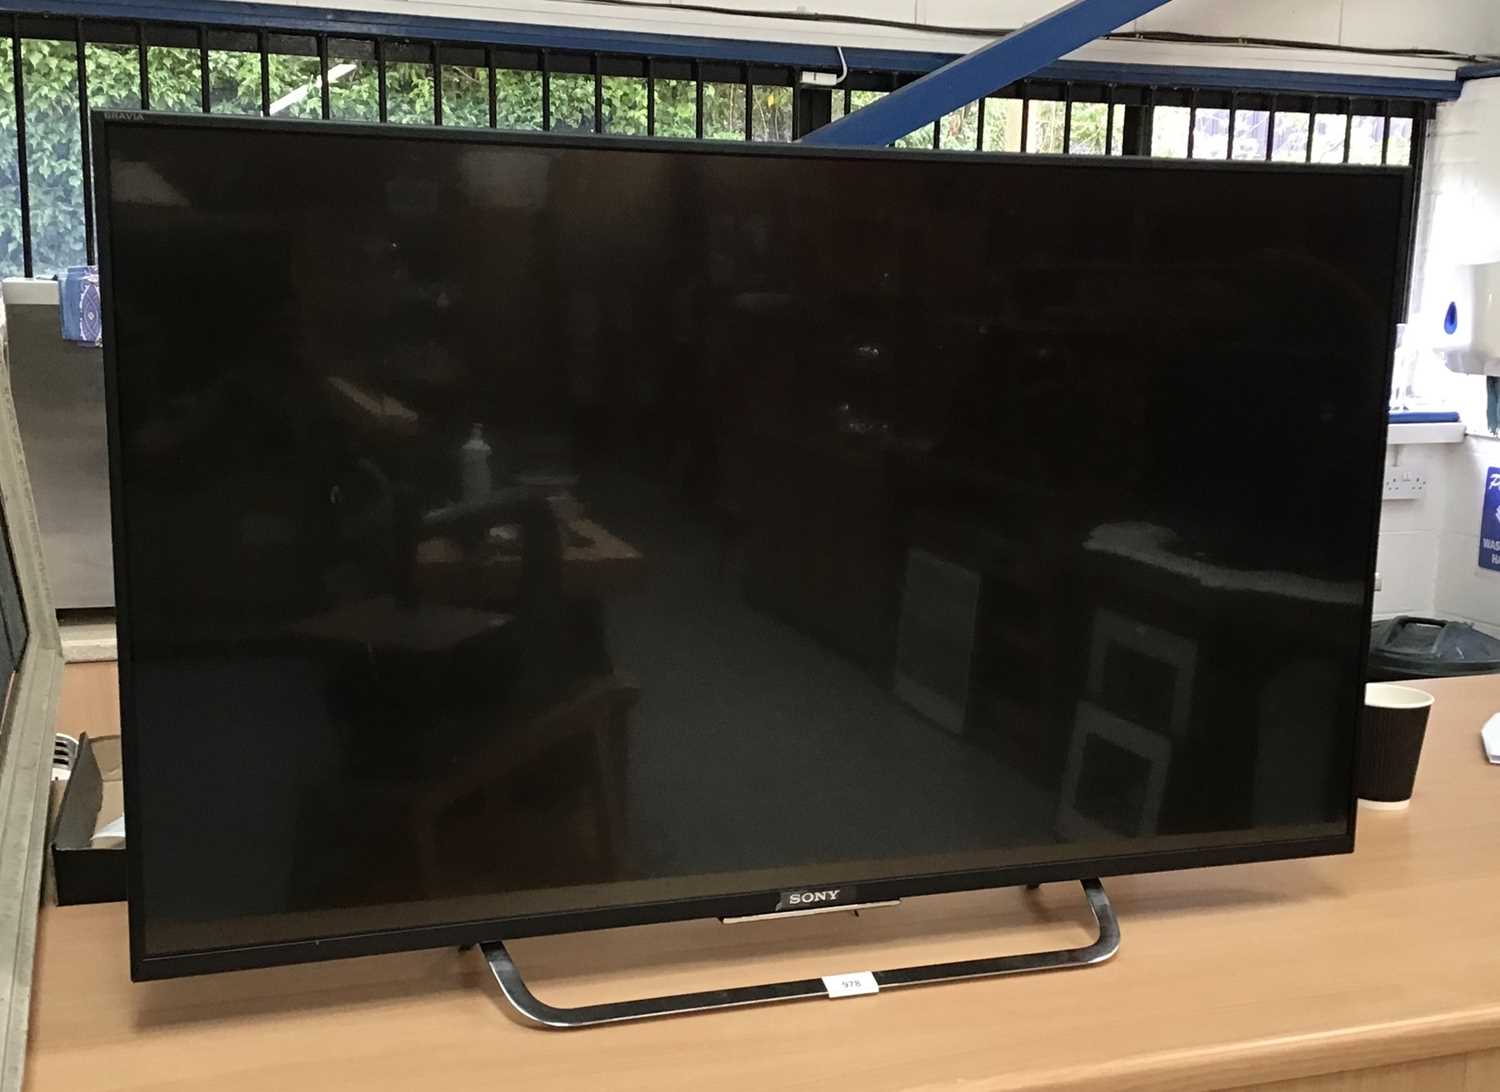 Sony Bravia smart flatscreen television - model no KD-43X8309C with remote control